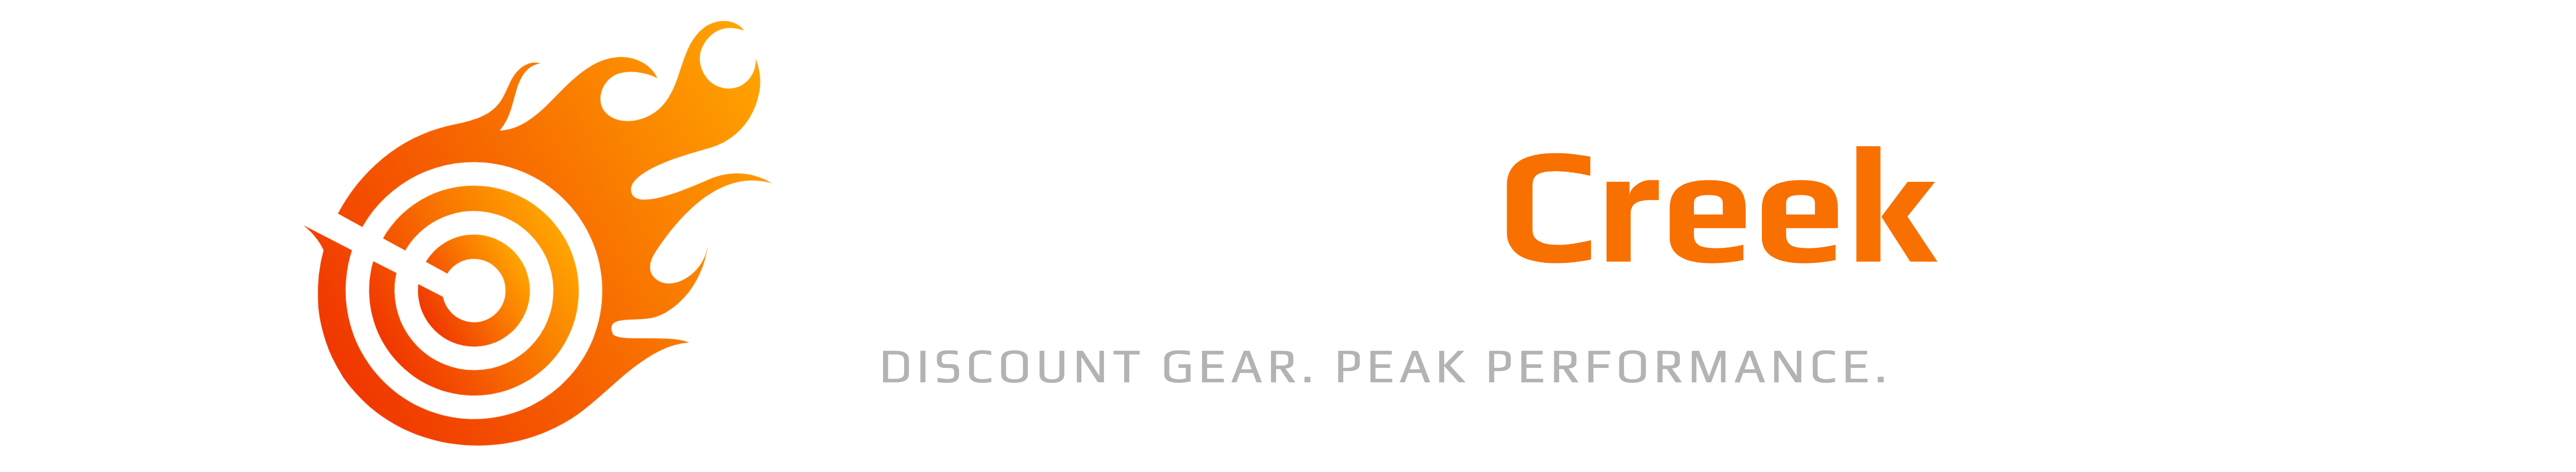 Archery Creek